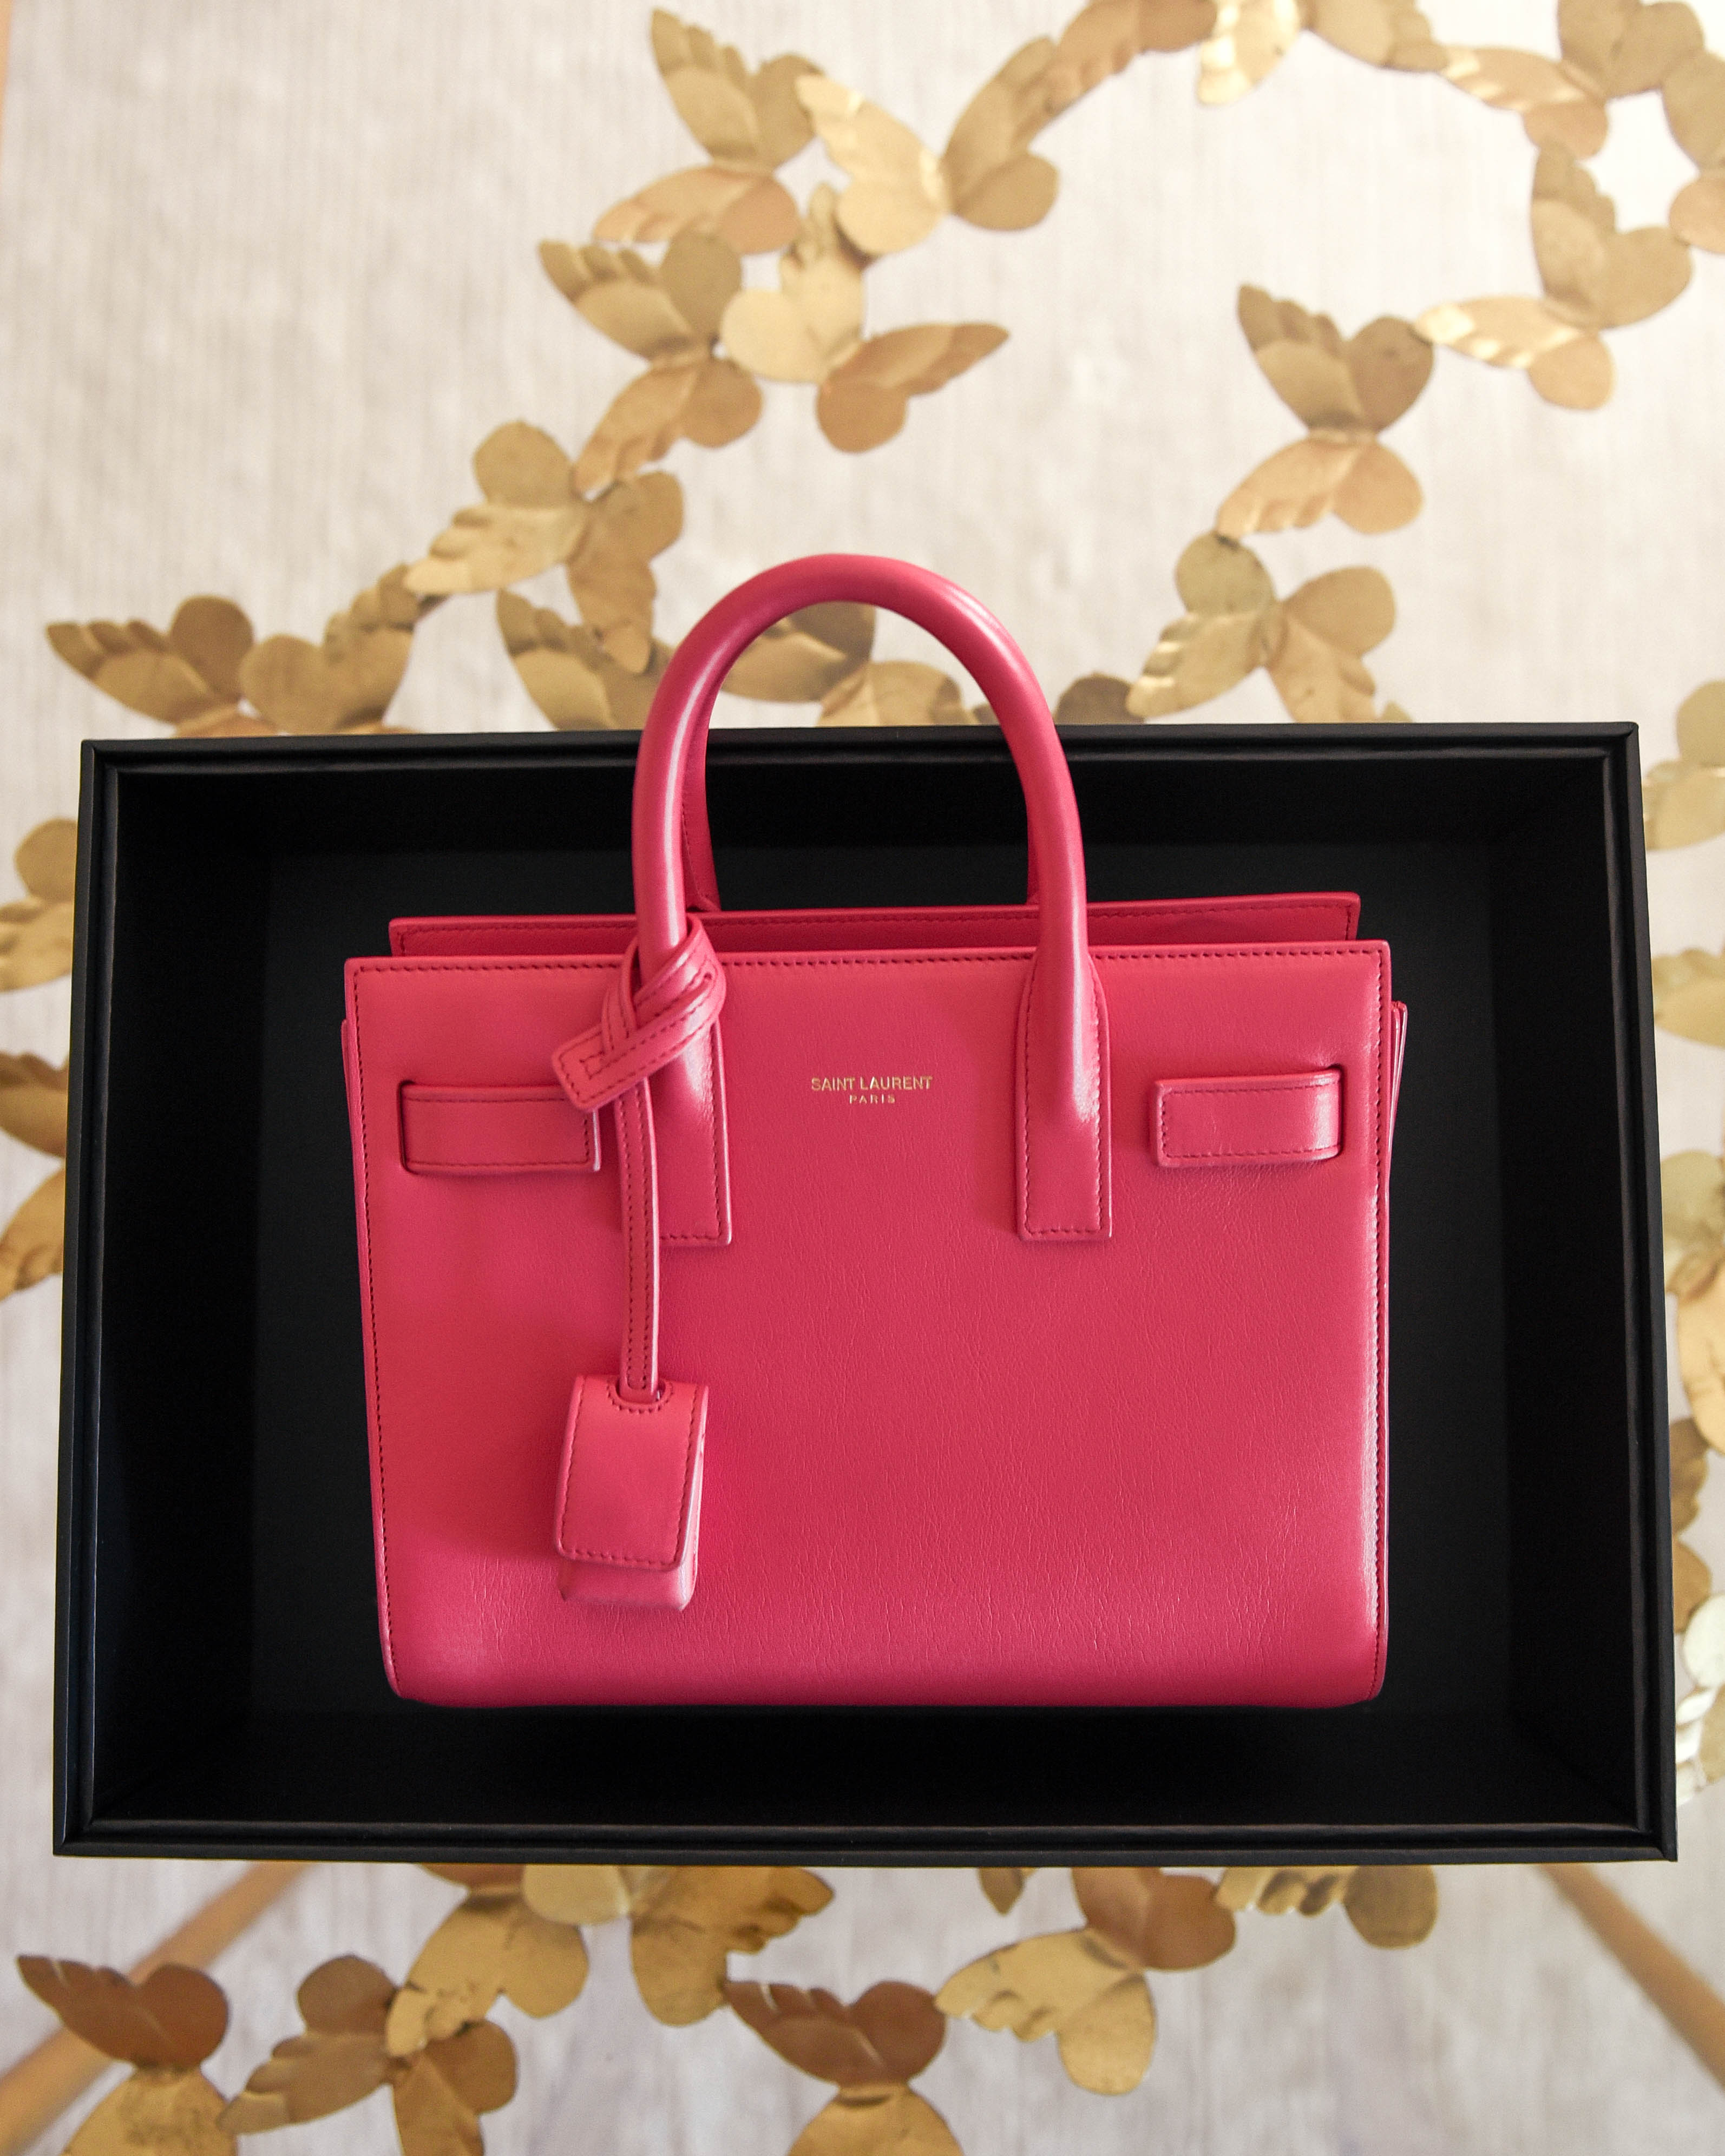 eBay-Authenticate-Saint-Laurent-Handbag-Pink-Designer-Handbag-Saint-Laurent-Nano-eBay-Designer-Handbags-eBay-Authenticate-Lo-Murphy-Saint-Laurent-Handbag-Pink-Designer-Handbag-Lo-Murohy